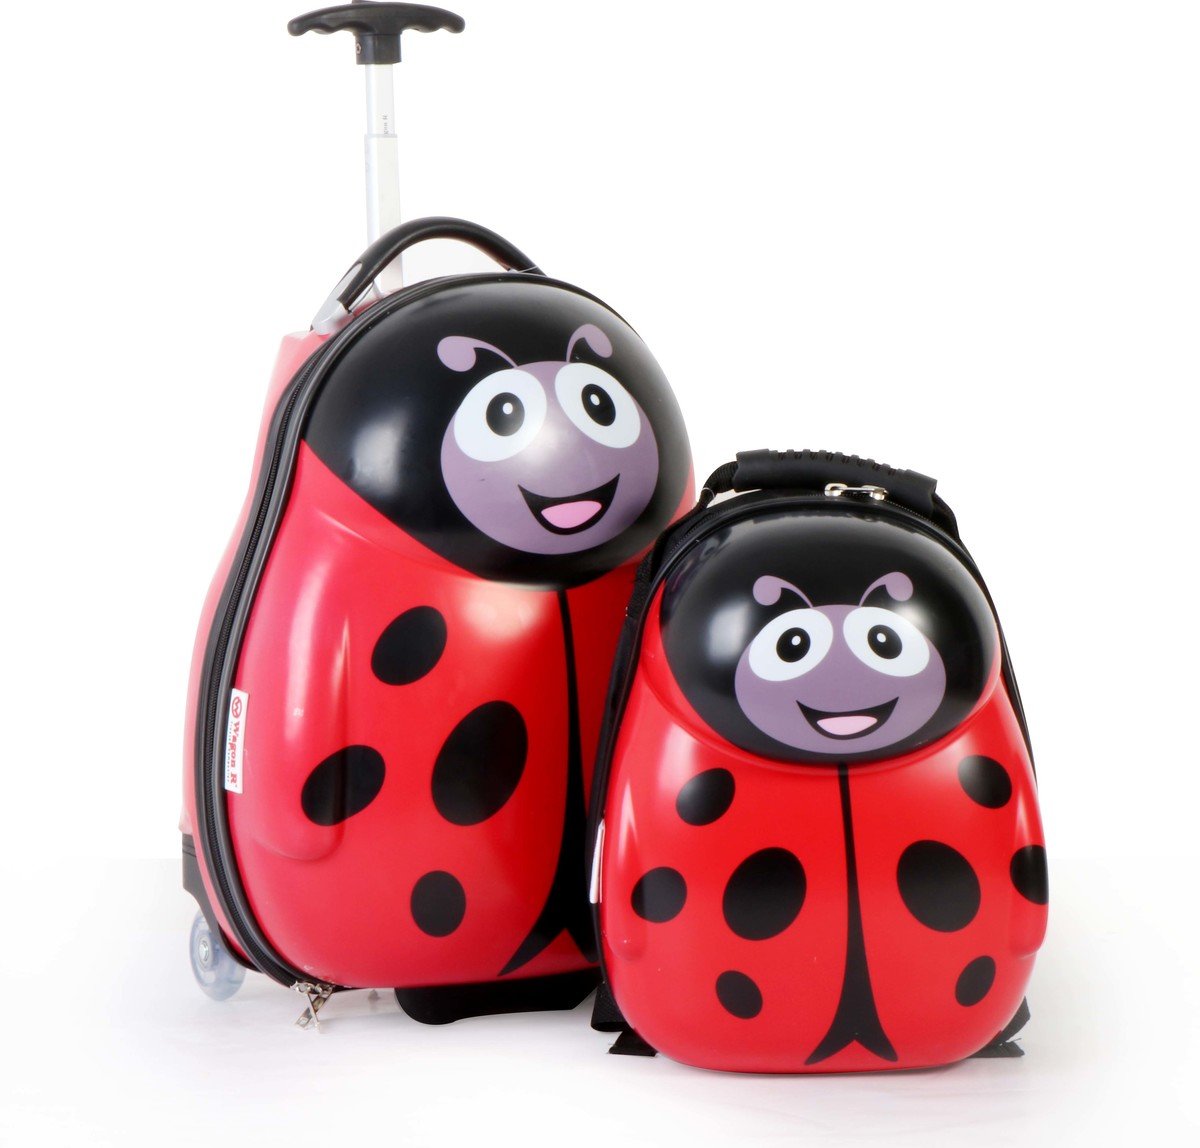 Wagon R Redbug Kids Luggage + Backpack EK02